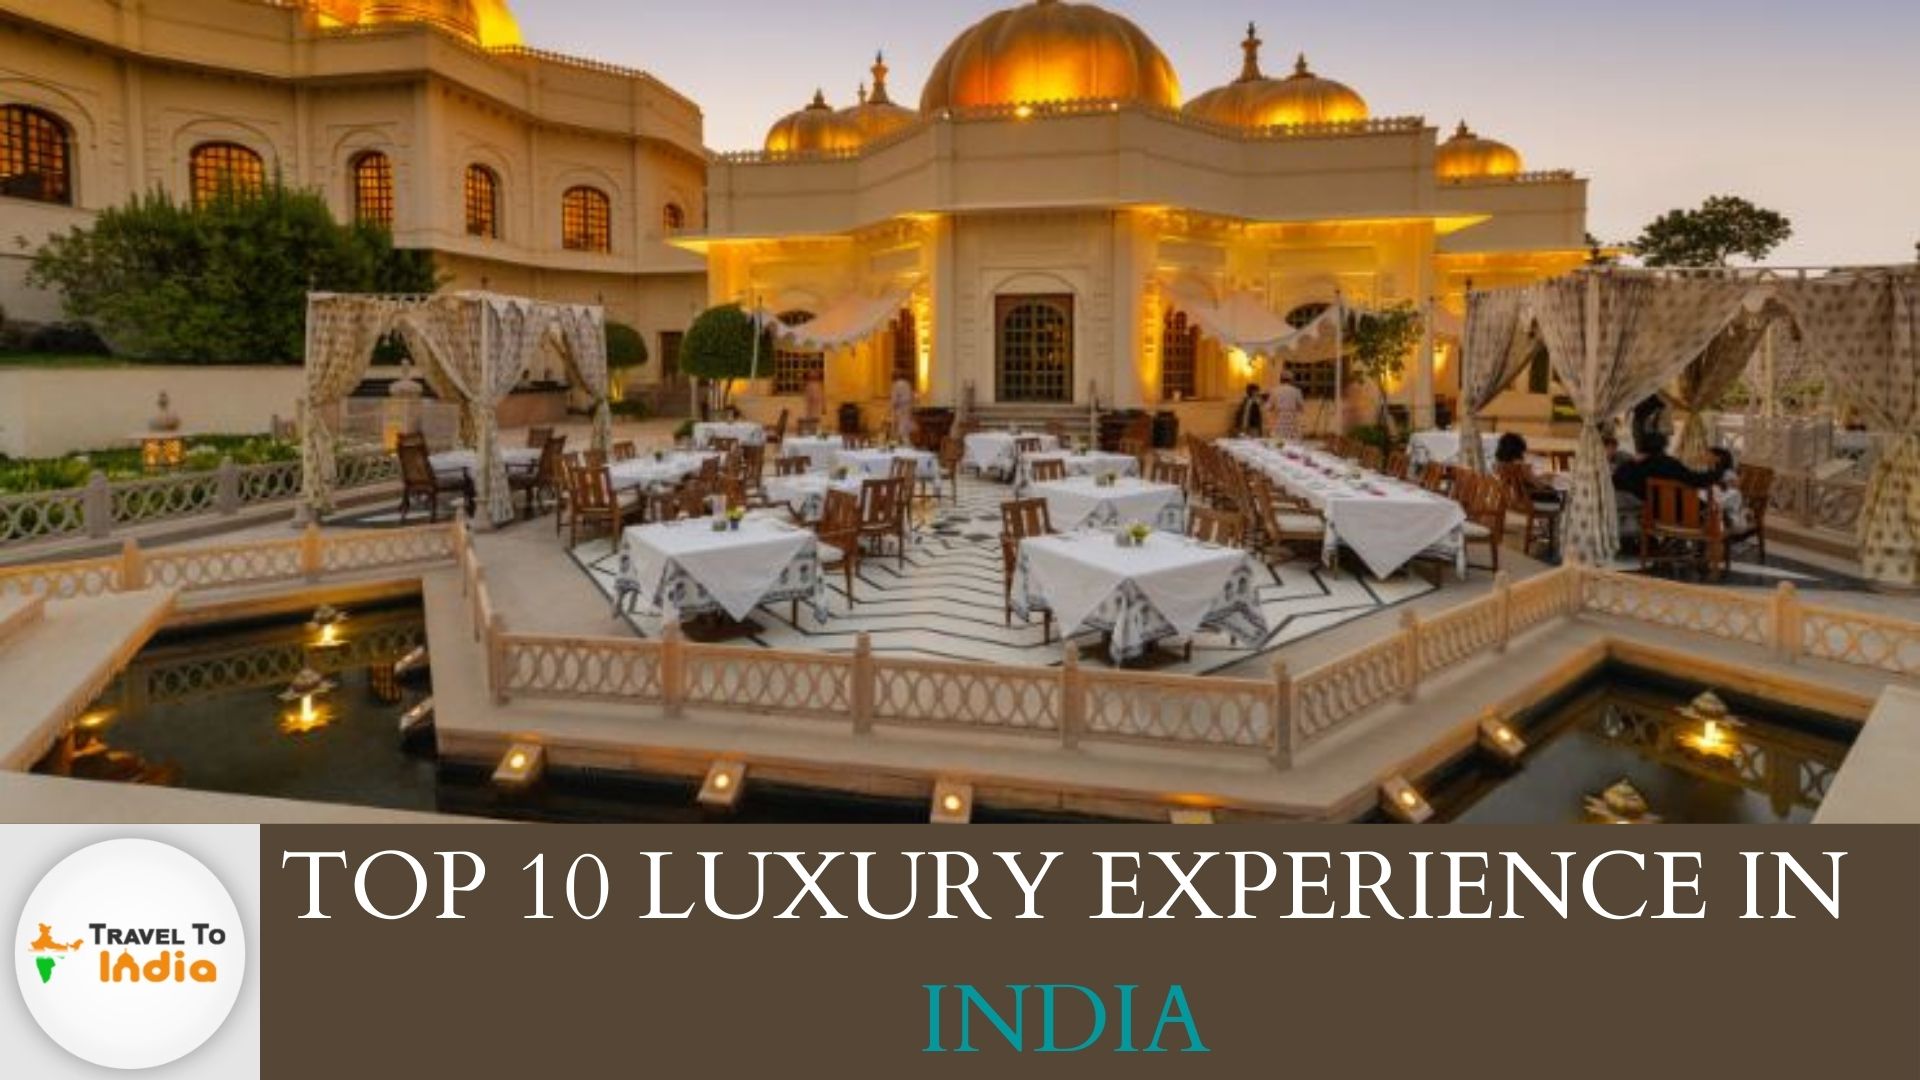 Top 10 Luxury Experiences in India